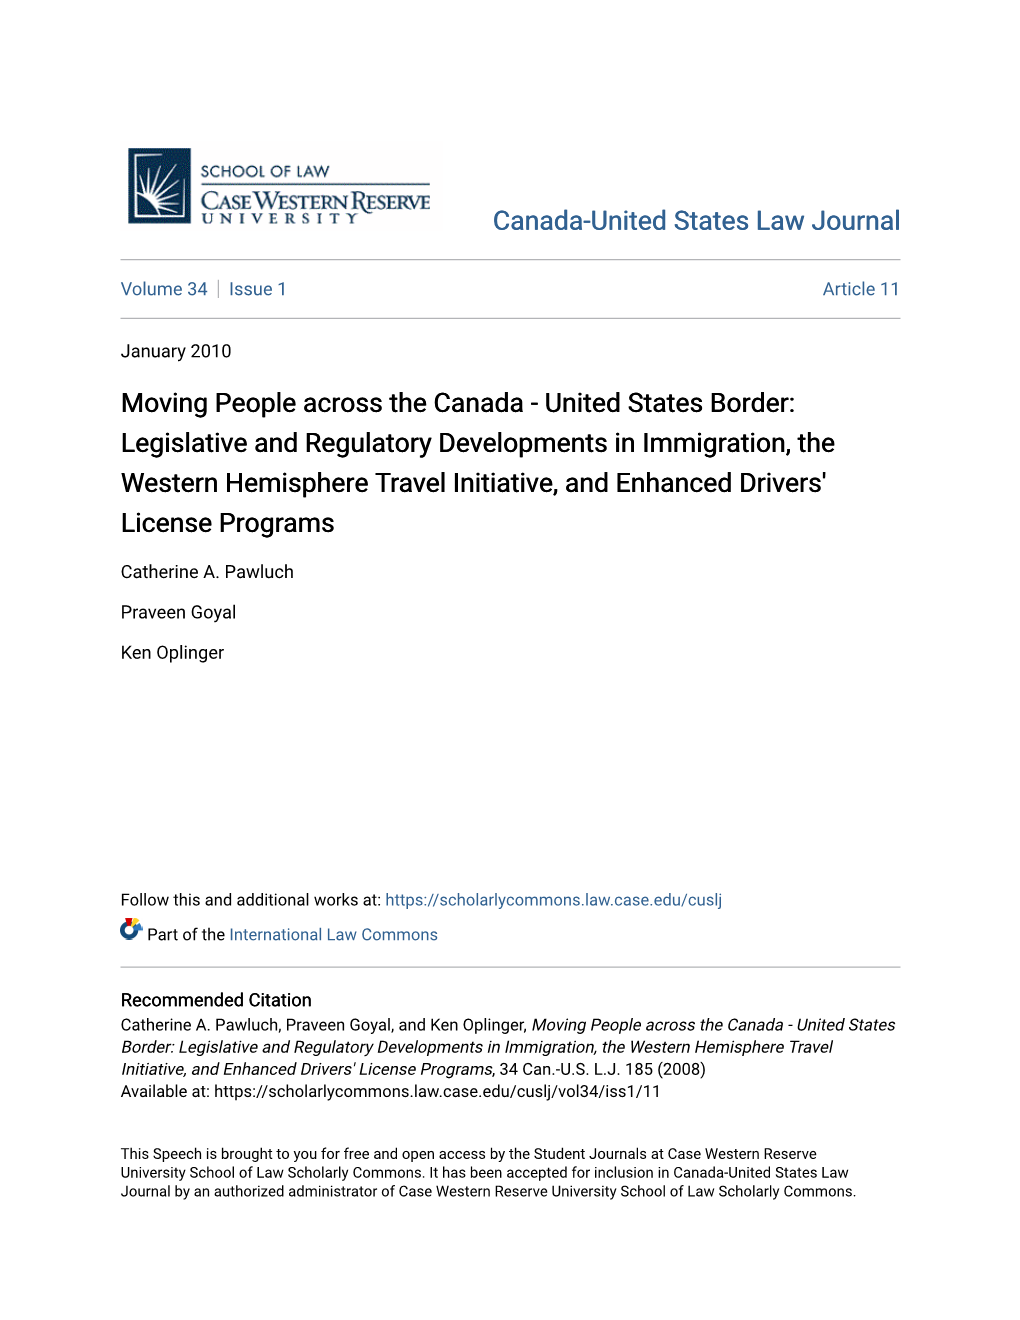 United States Border: Legislative and Regulatory Developments in Immigration, the Western Hemisphere Travel Initiative, and Enhanced Drivers' License Programs